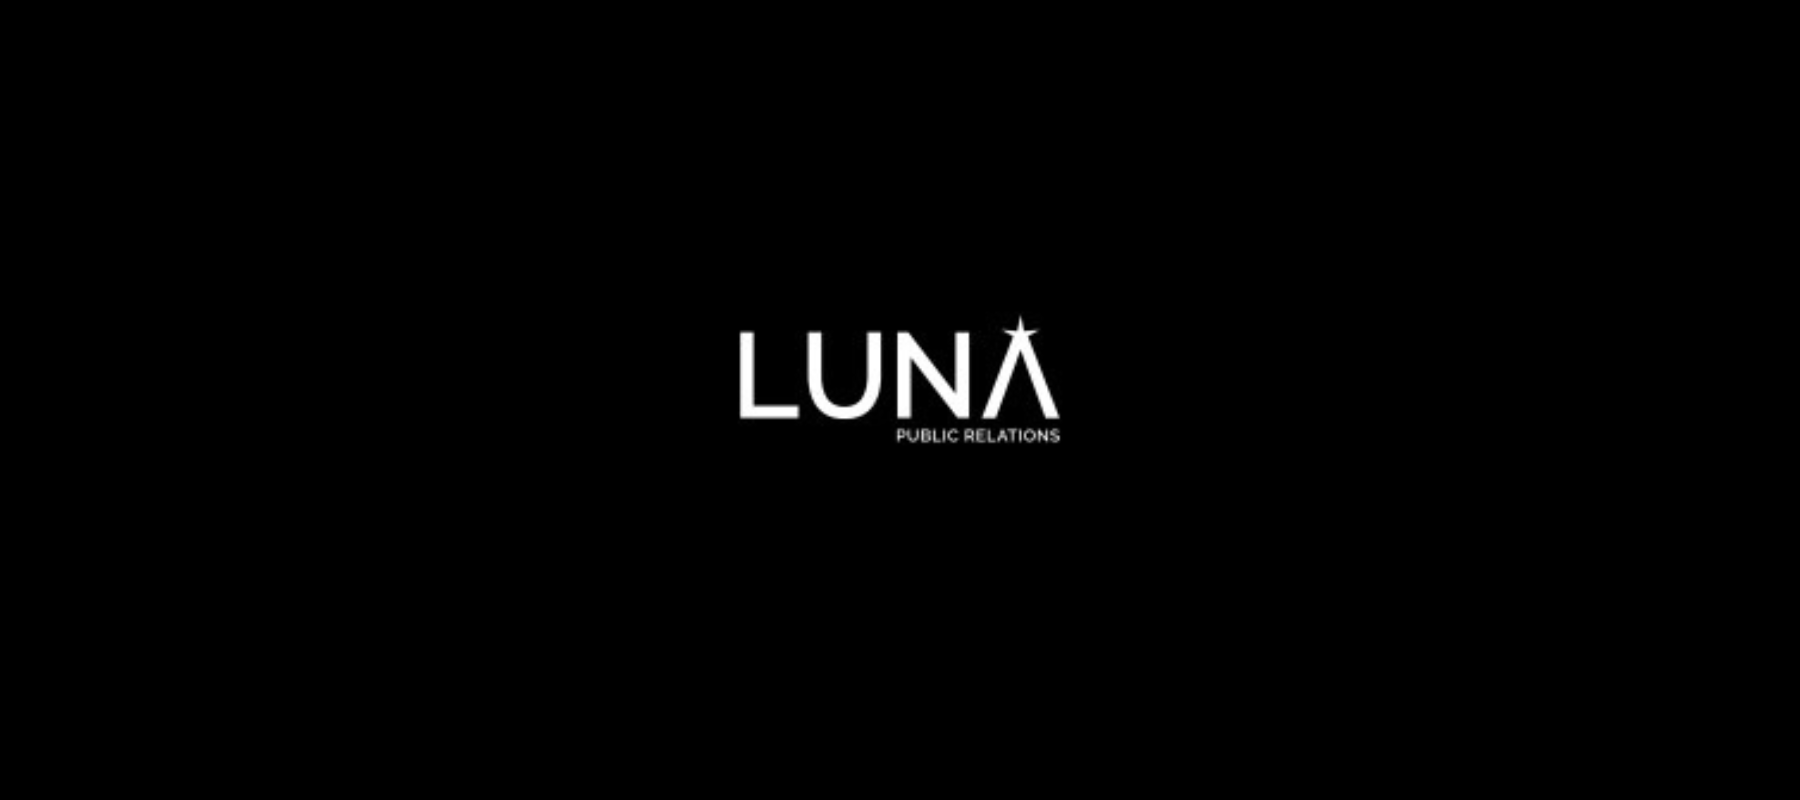 Luna PR announces strategic partnership with Crypto Valley Association